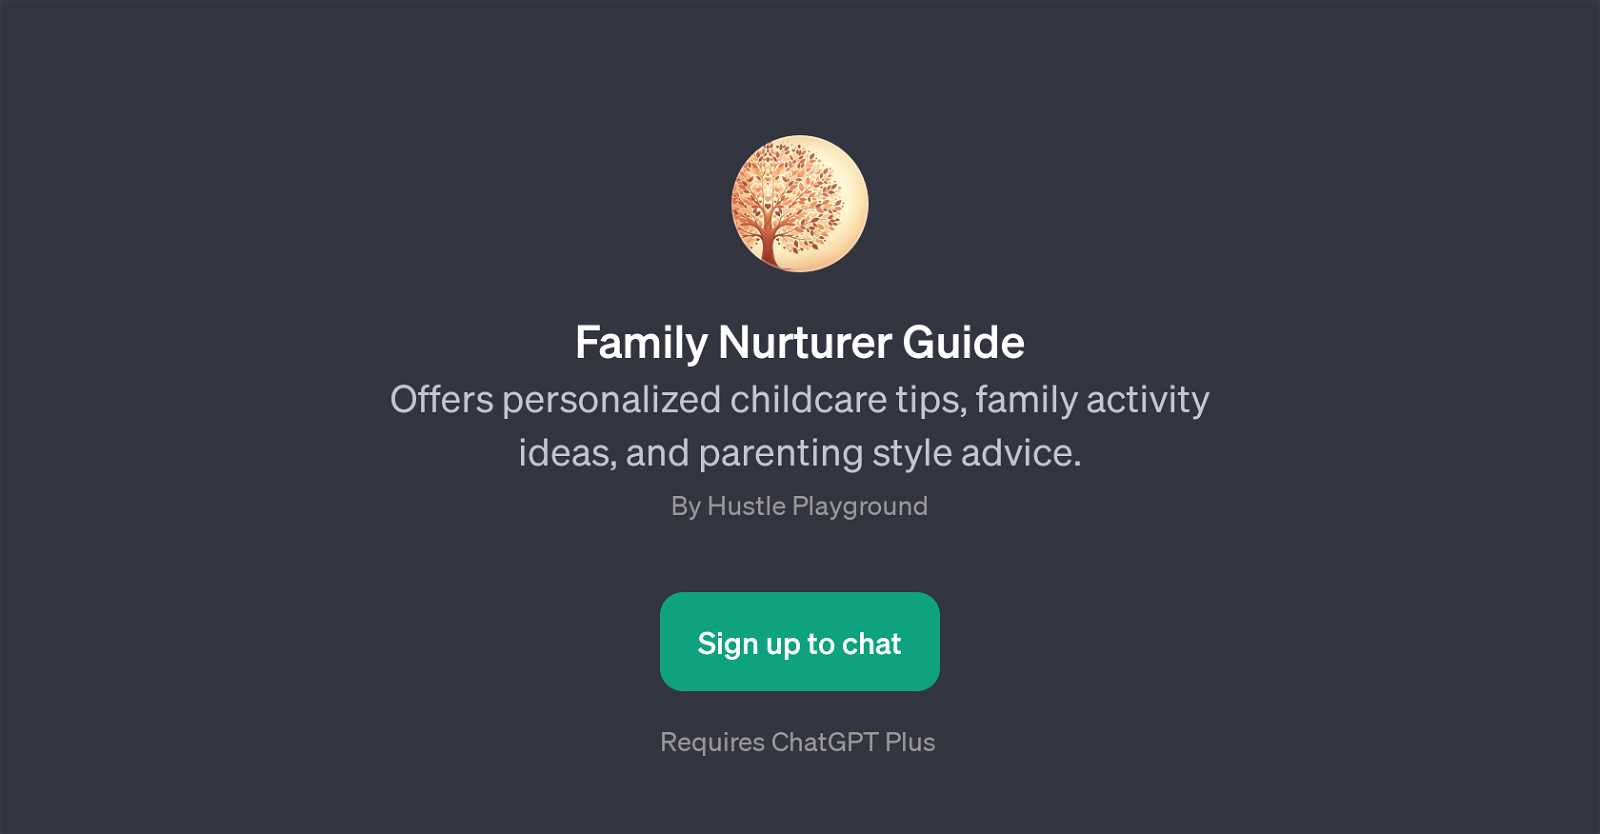 Family Nurturer Guide website